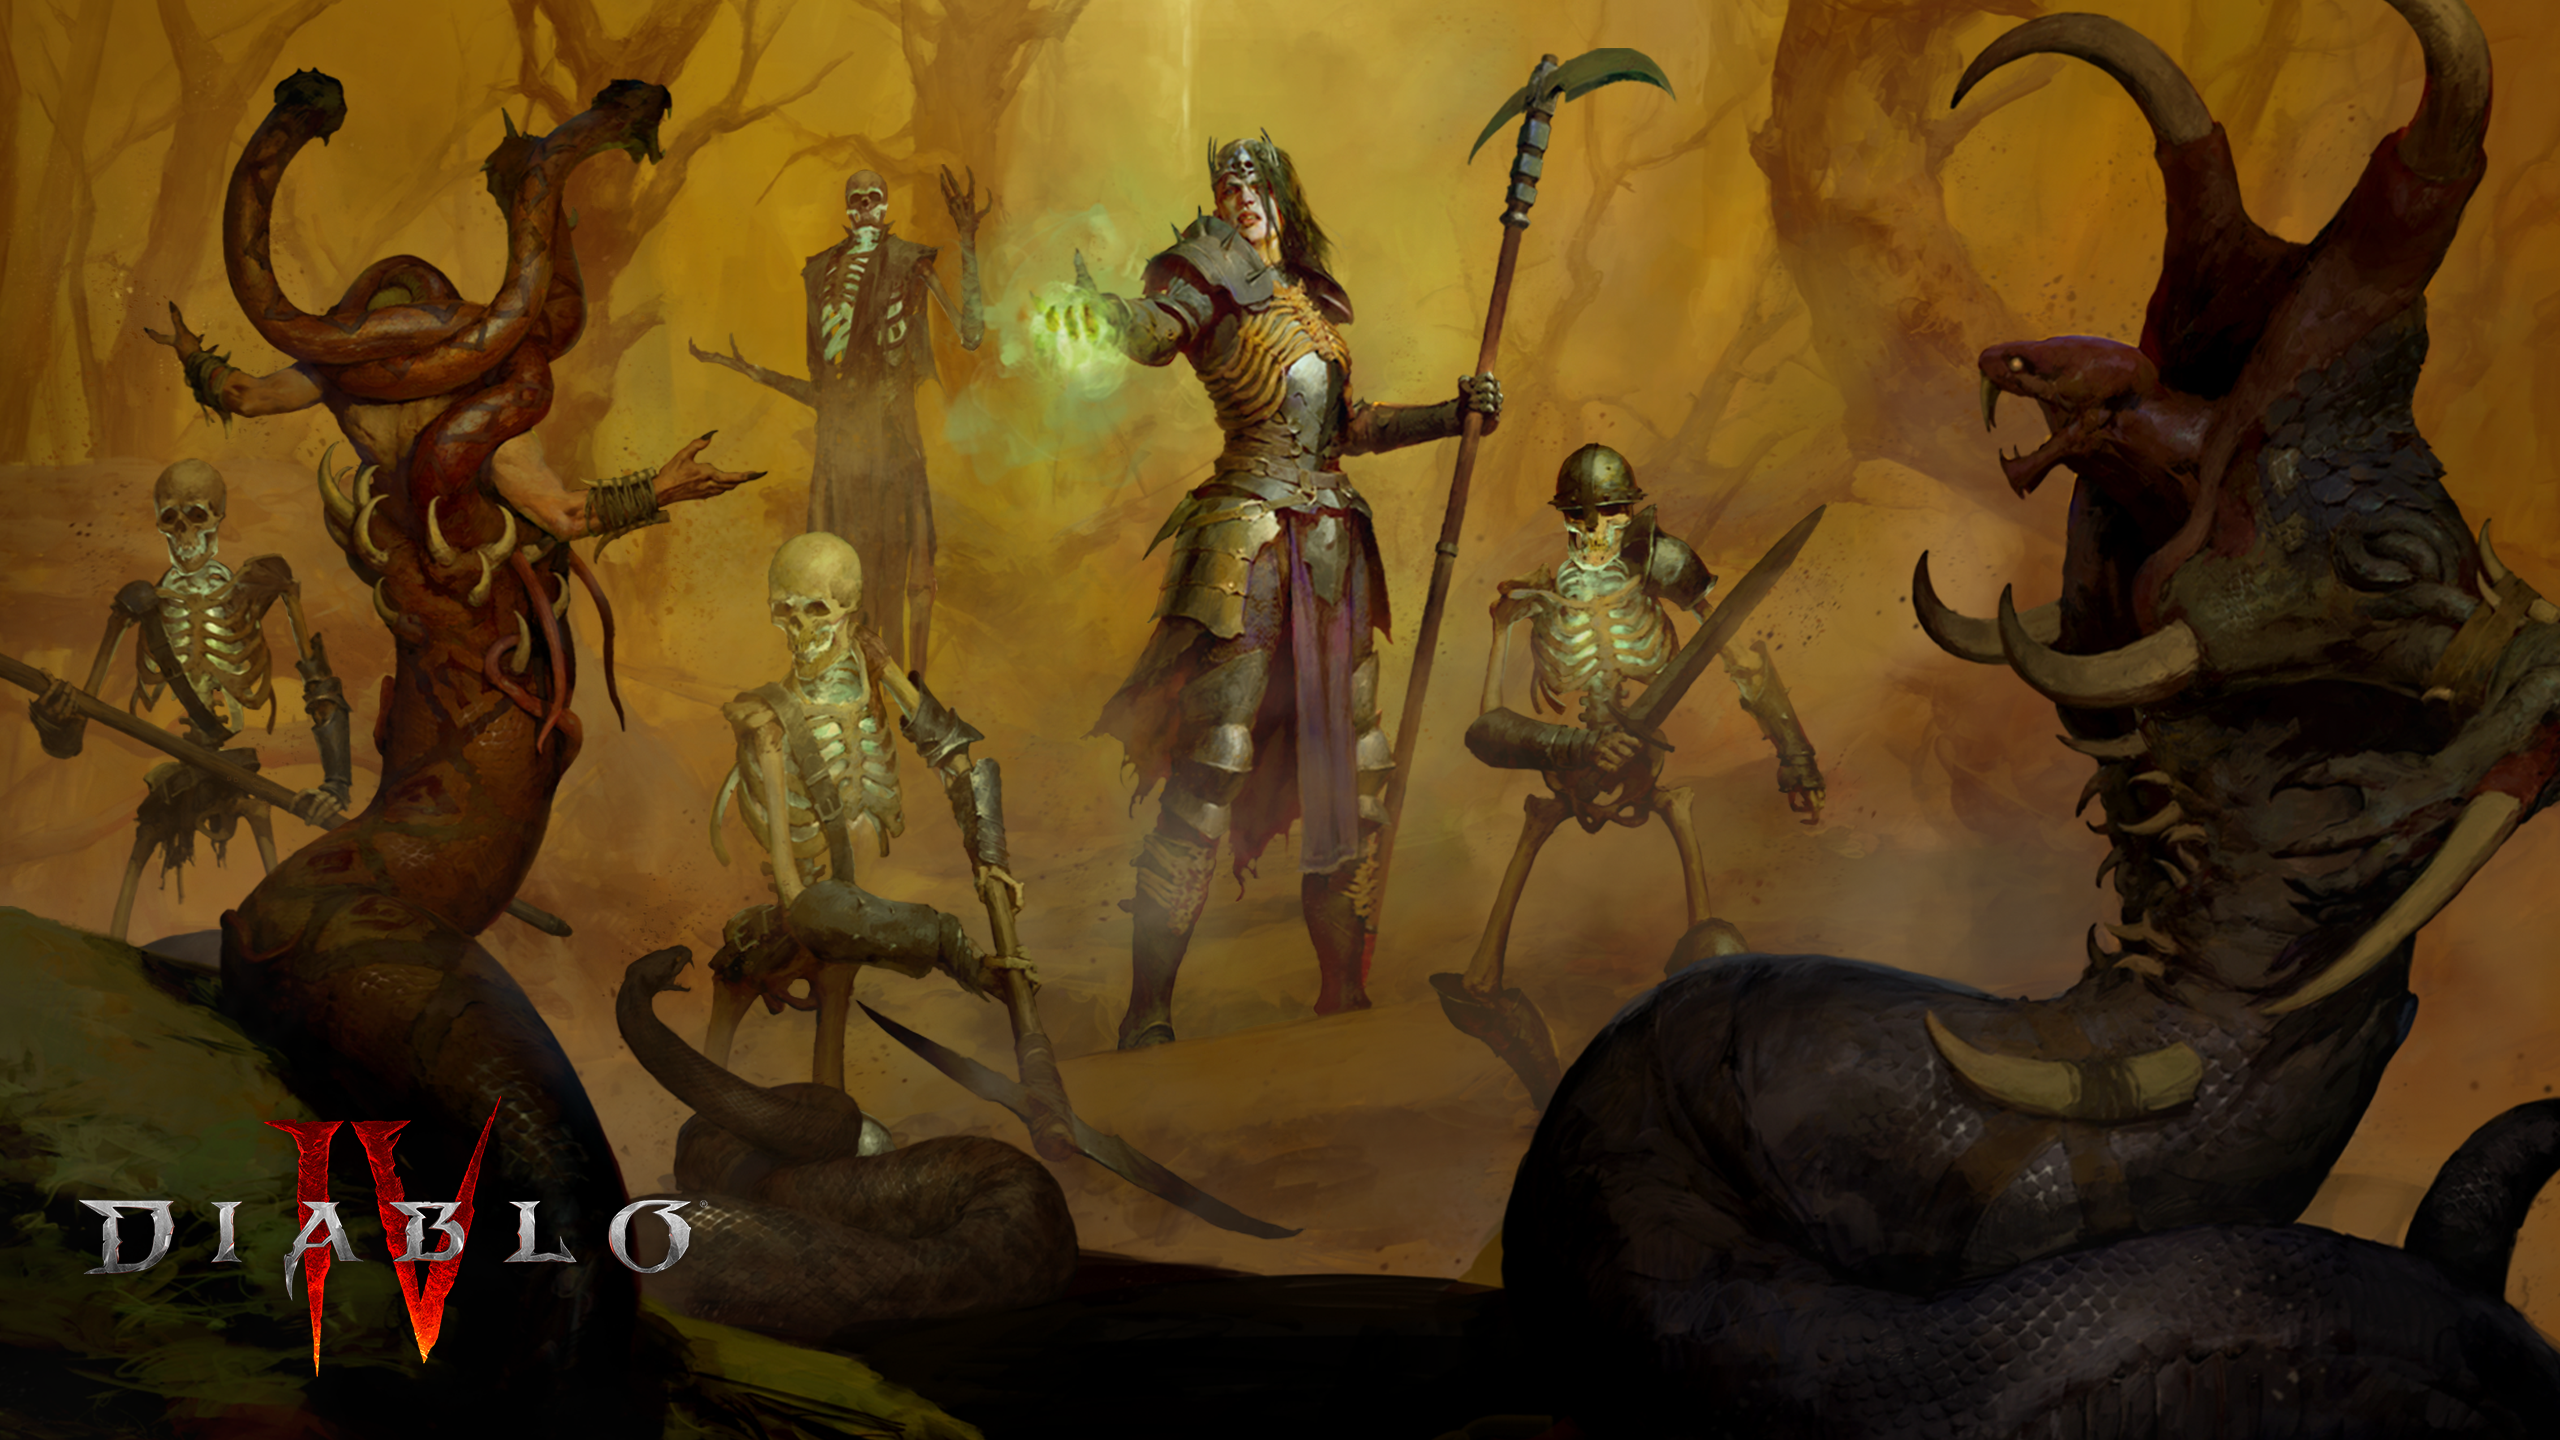 General 2560x1440 Diablo IV Diablo video game art Blizzard Entertainment video game characters armor video games skeleton sword Video Game Creatures helmet trees